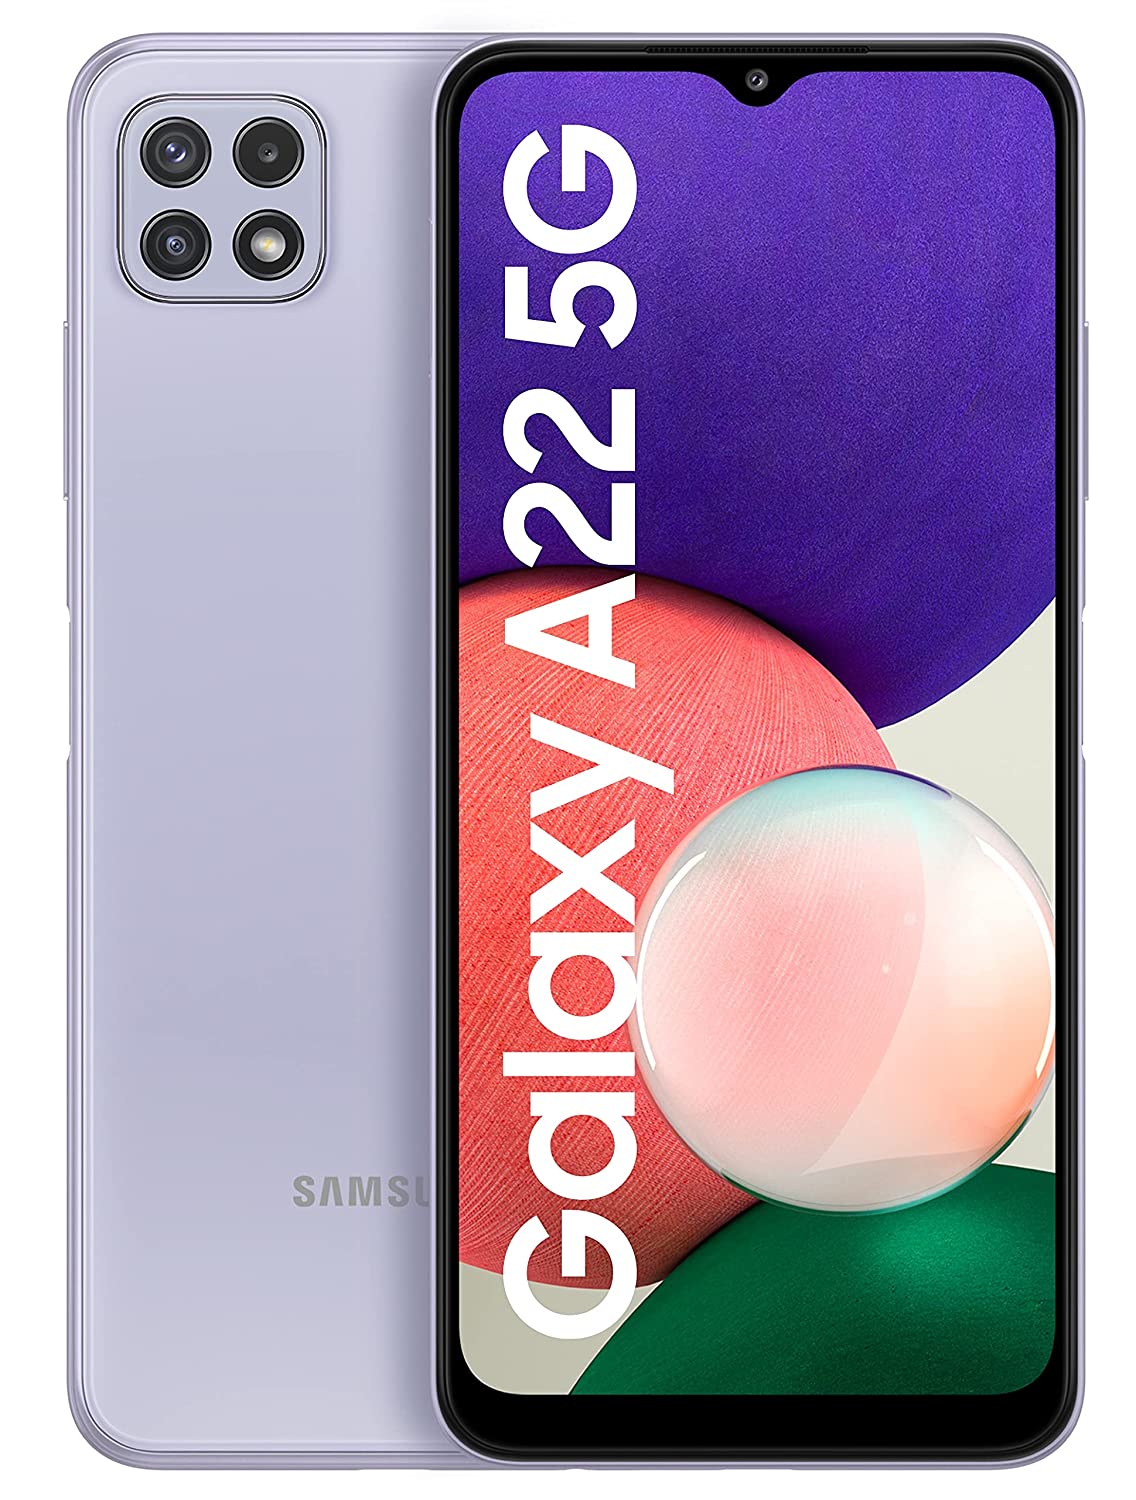 5g samsung a22 Samsung Galaxy